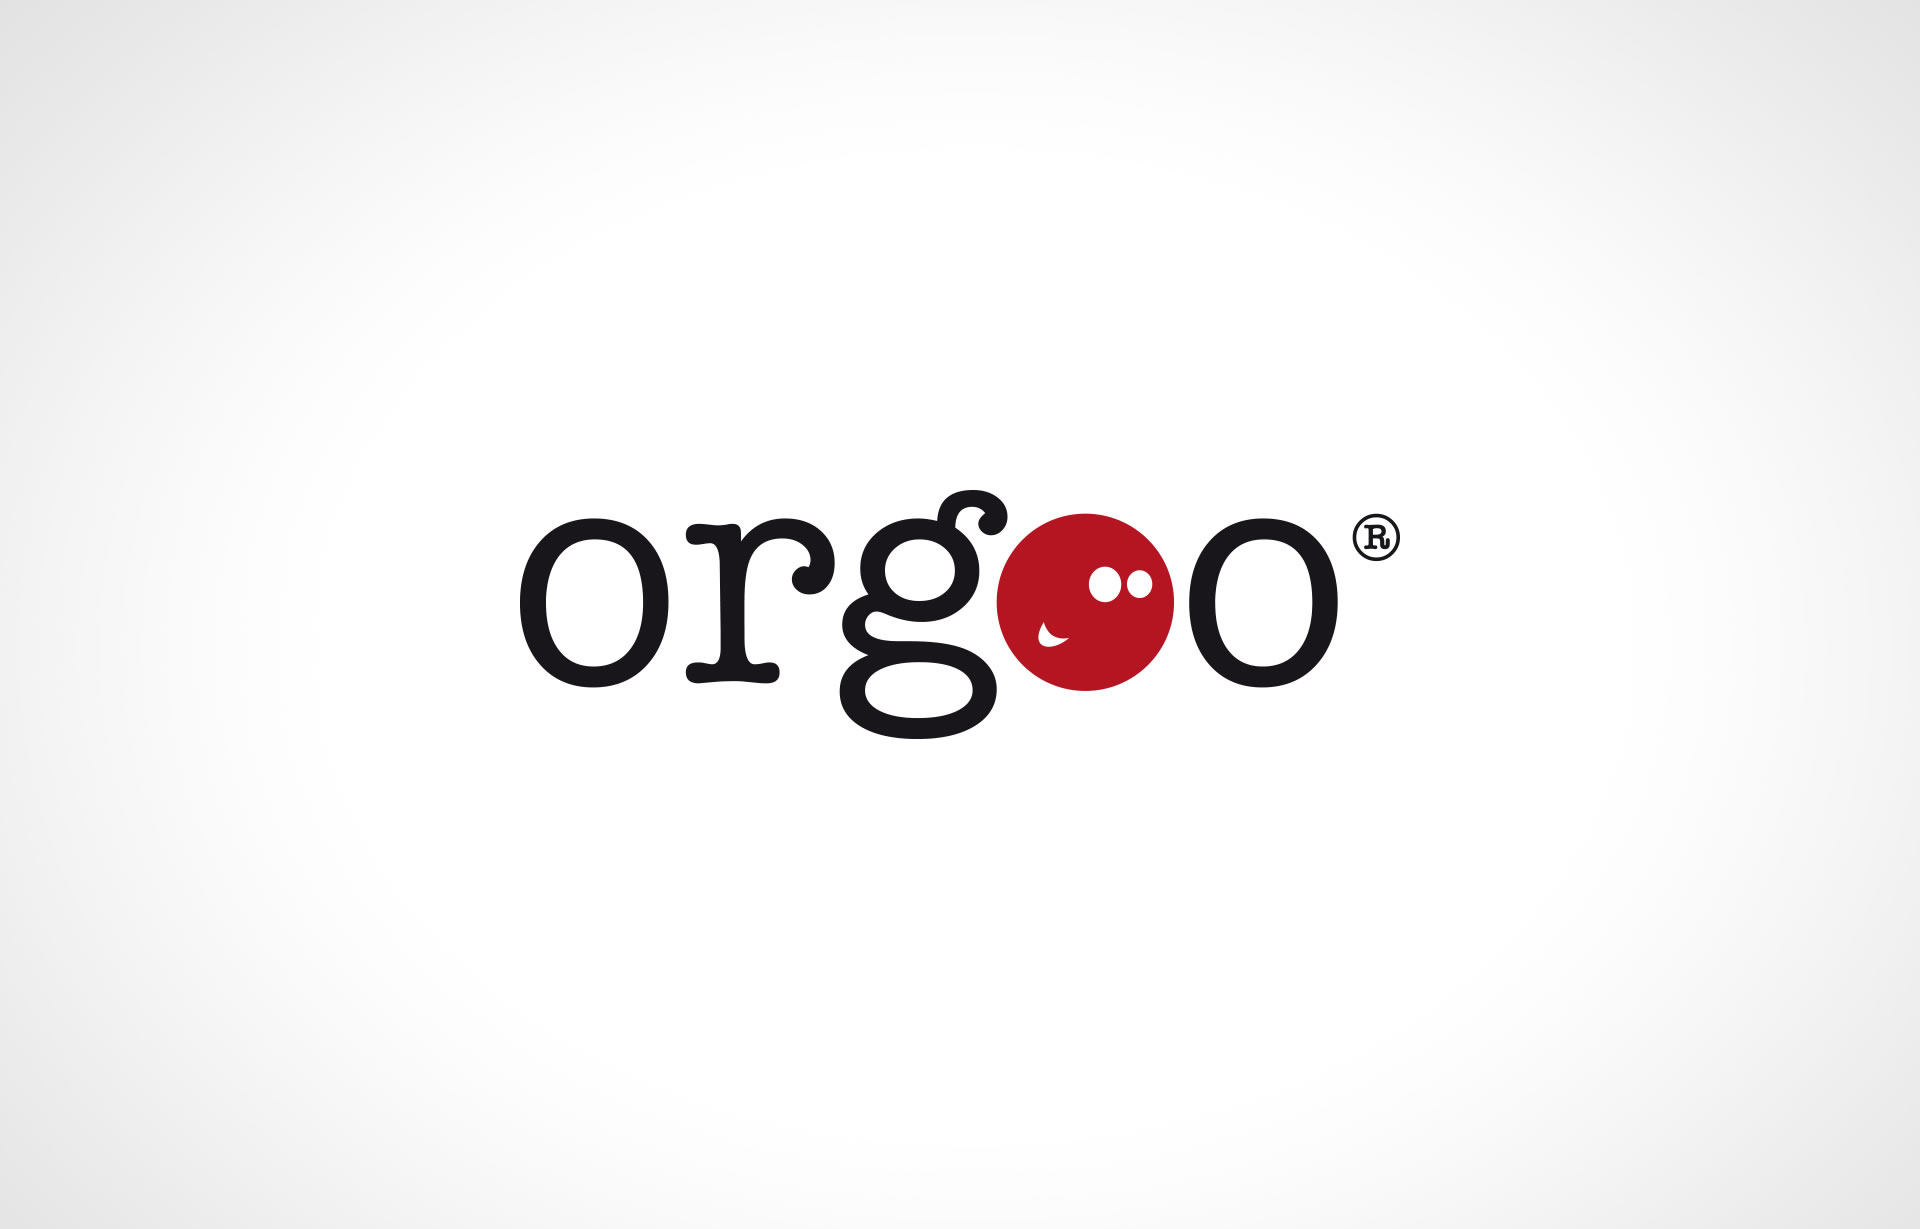 Logo Design - Orgoo